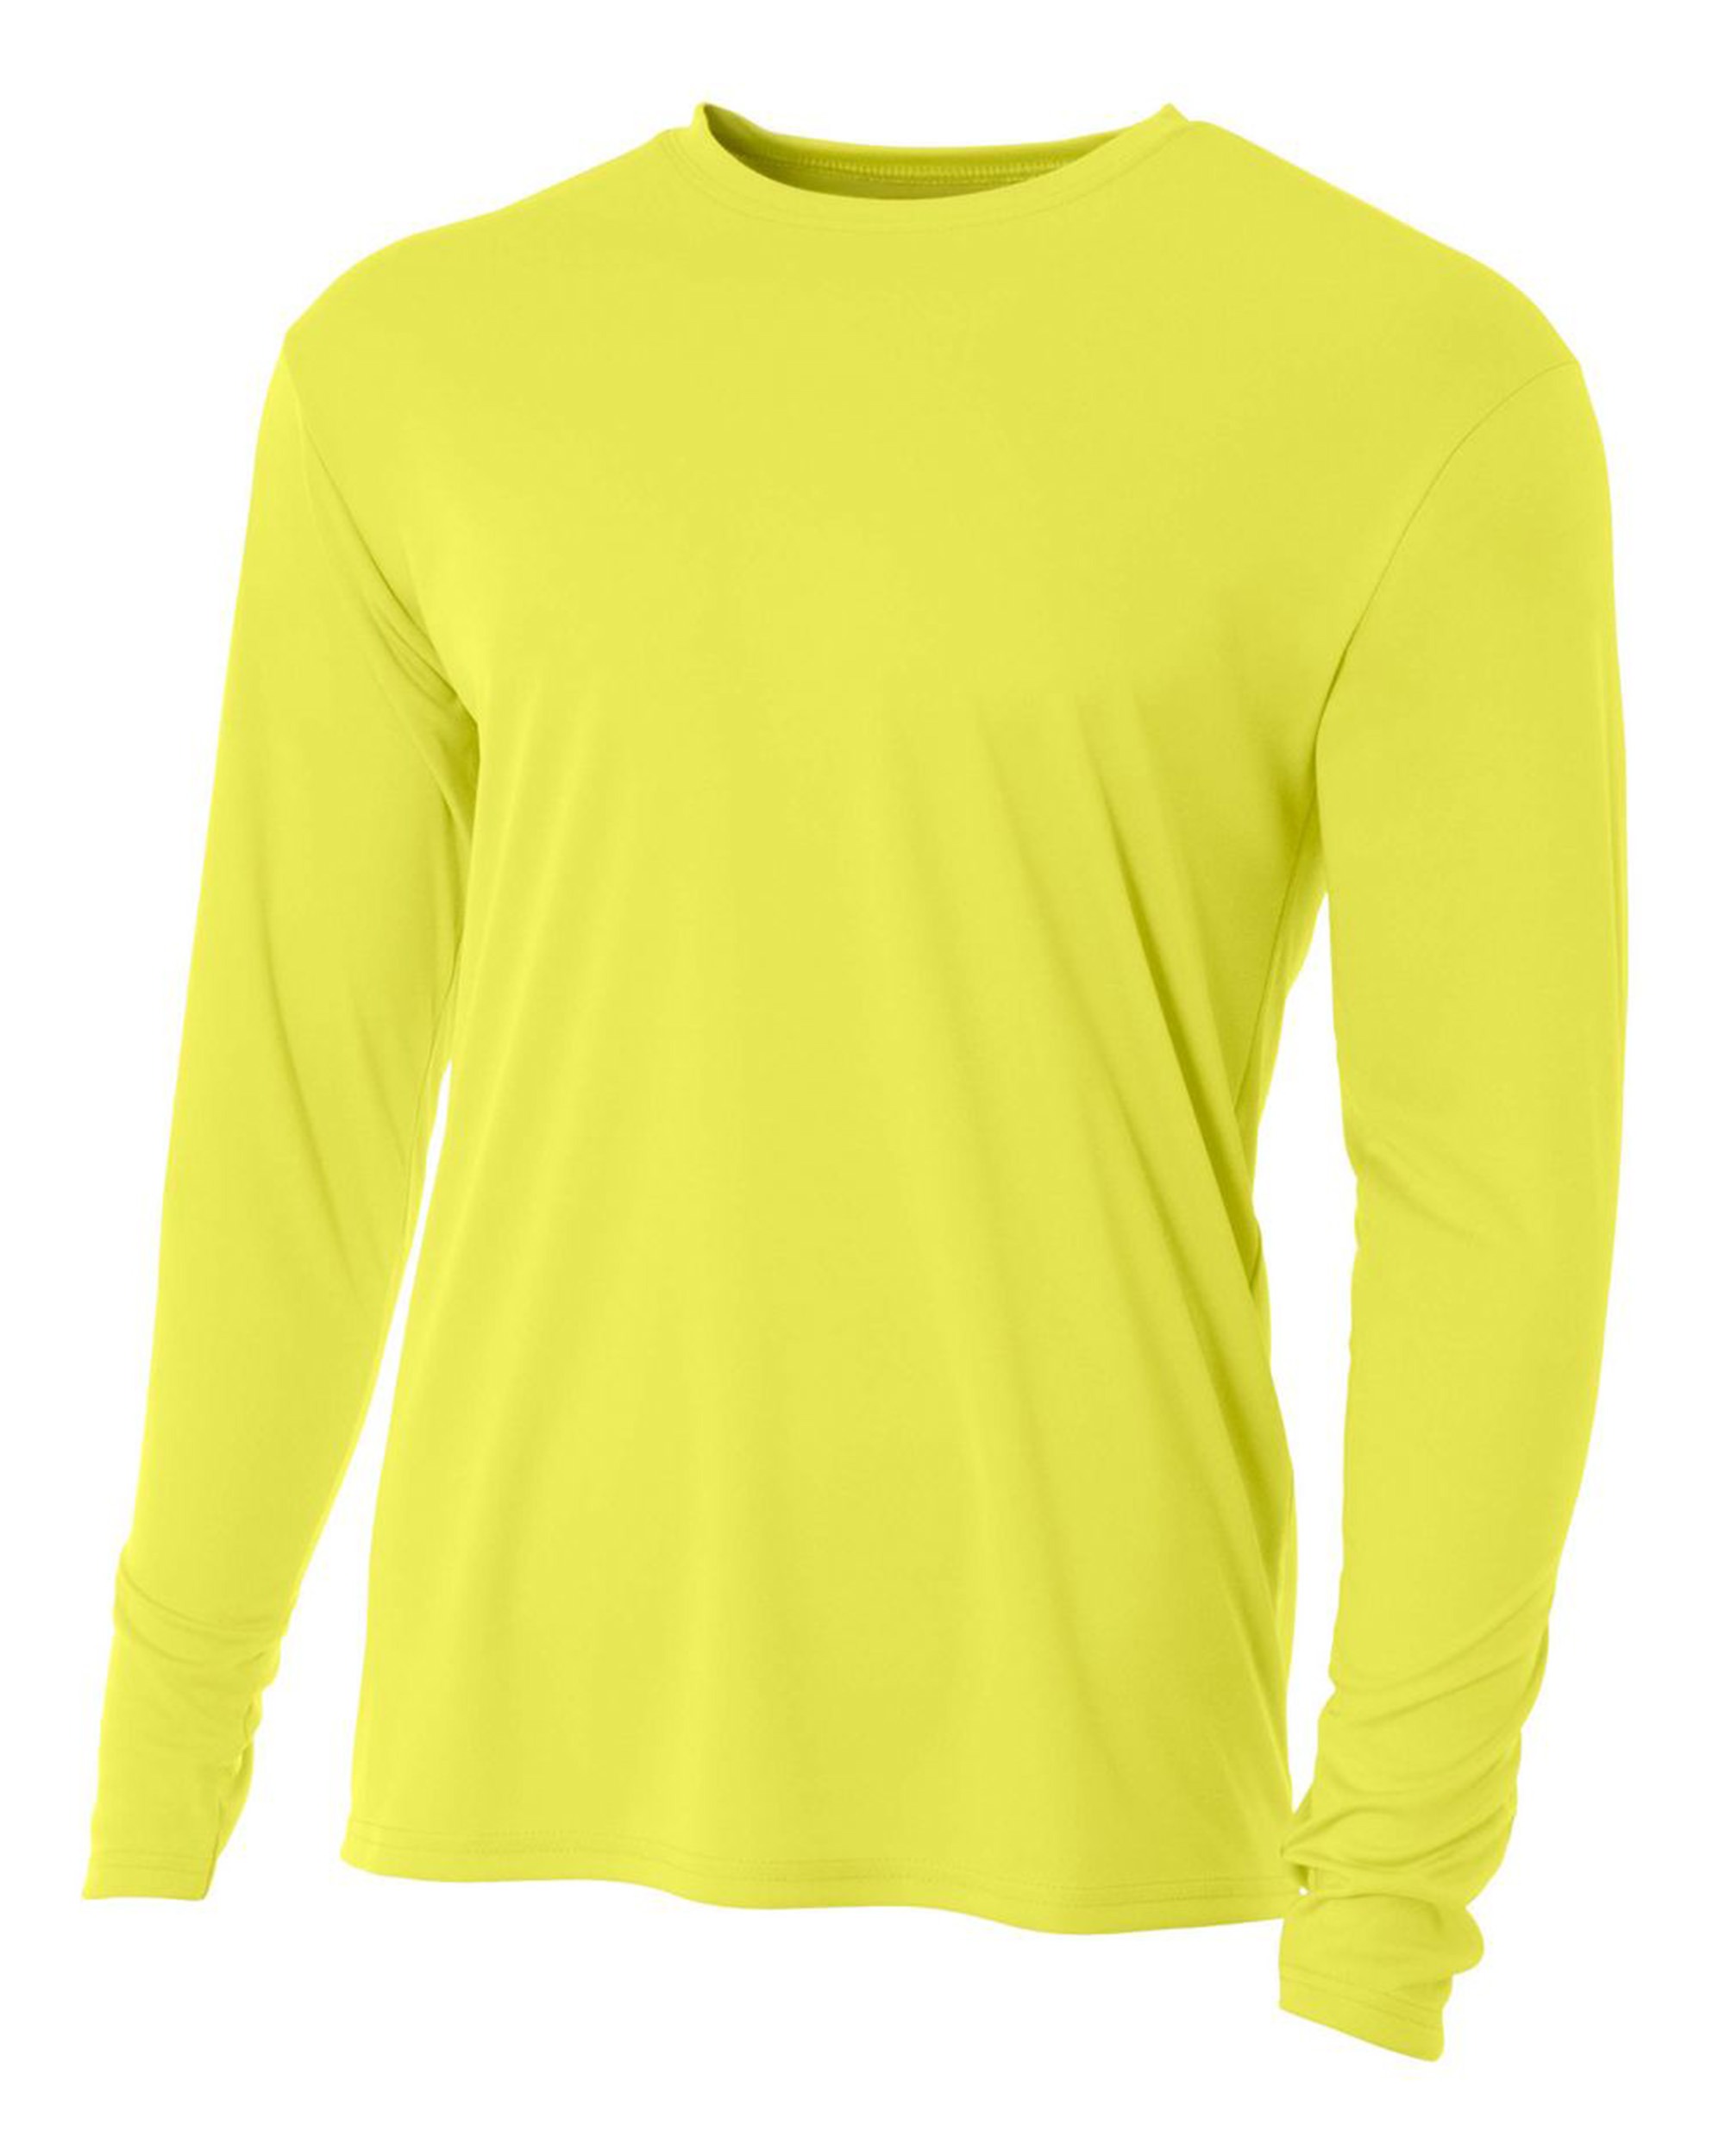 Long Sleeve Tee Shirt Safety Yellow